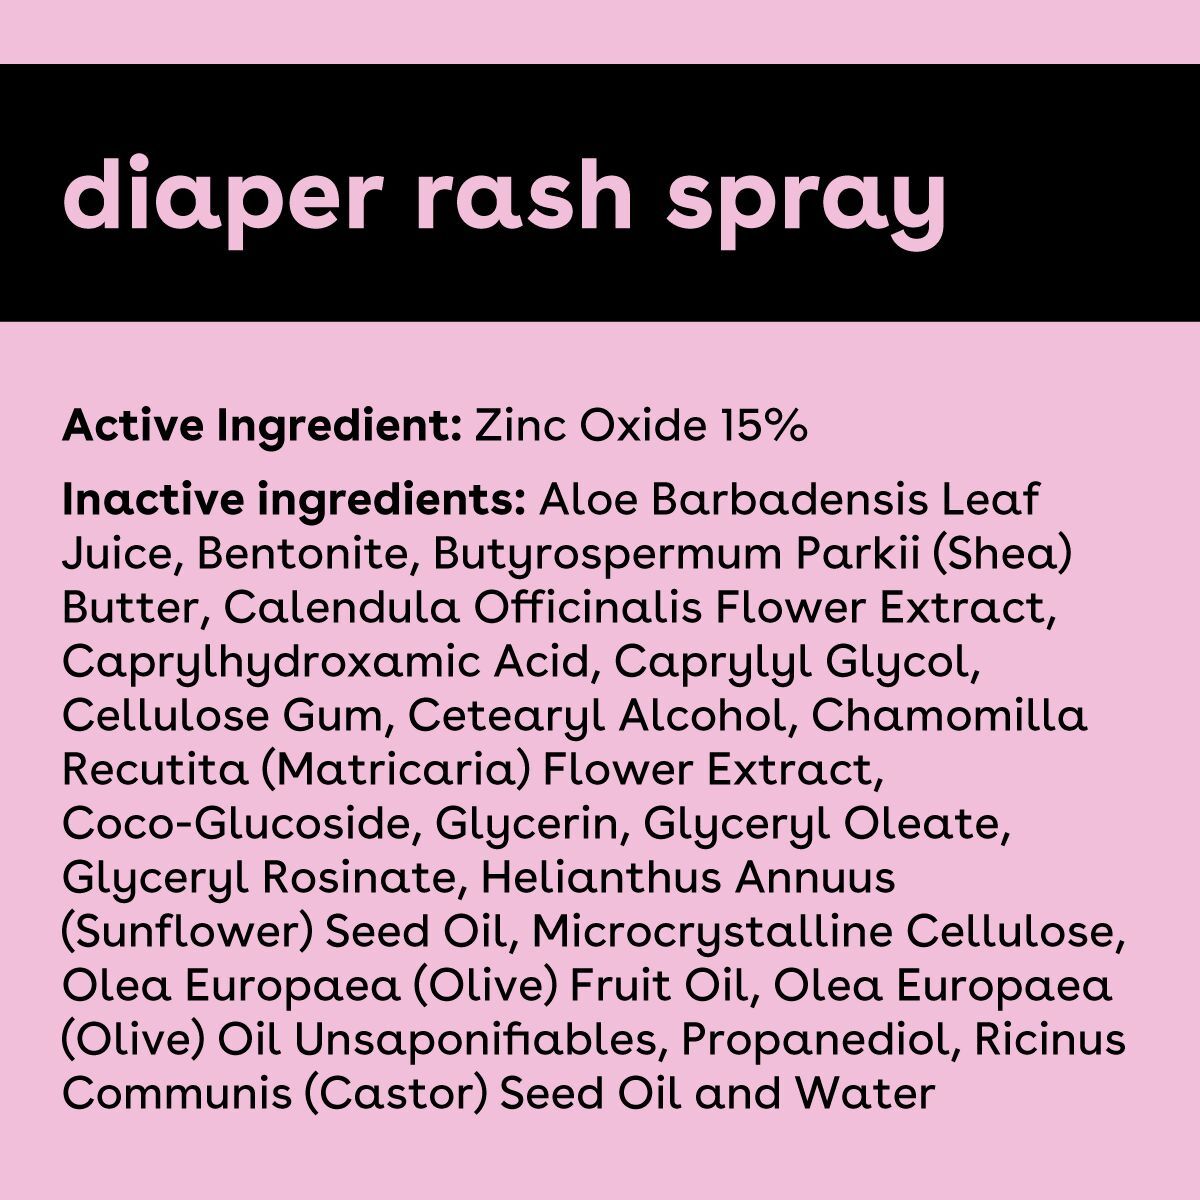 diaper rash spray ingredients list